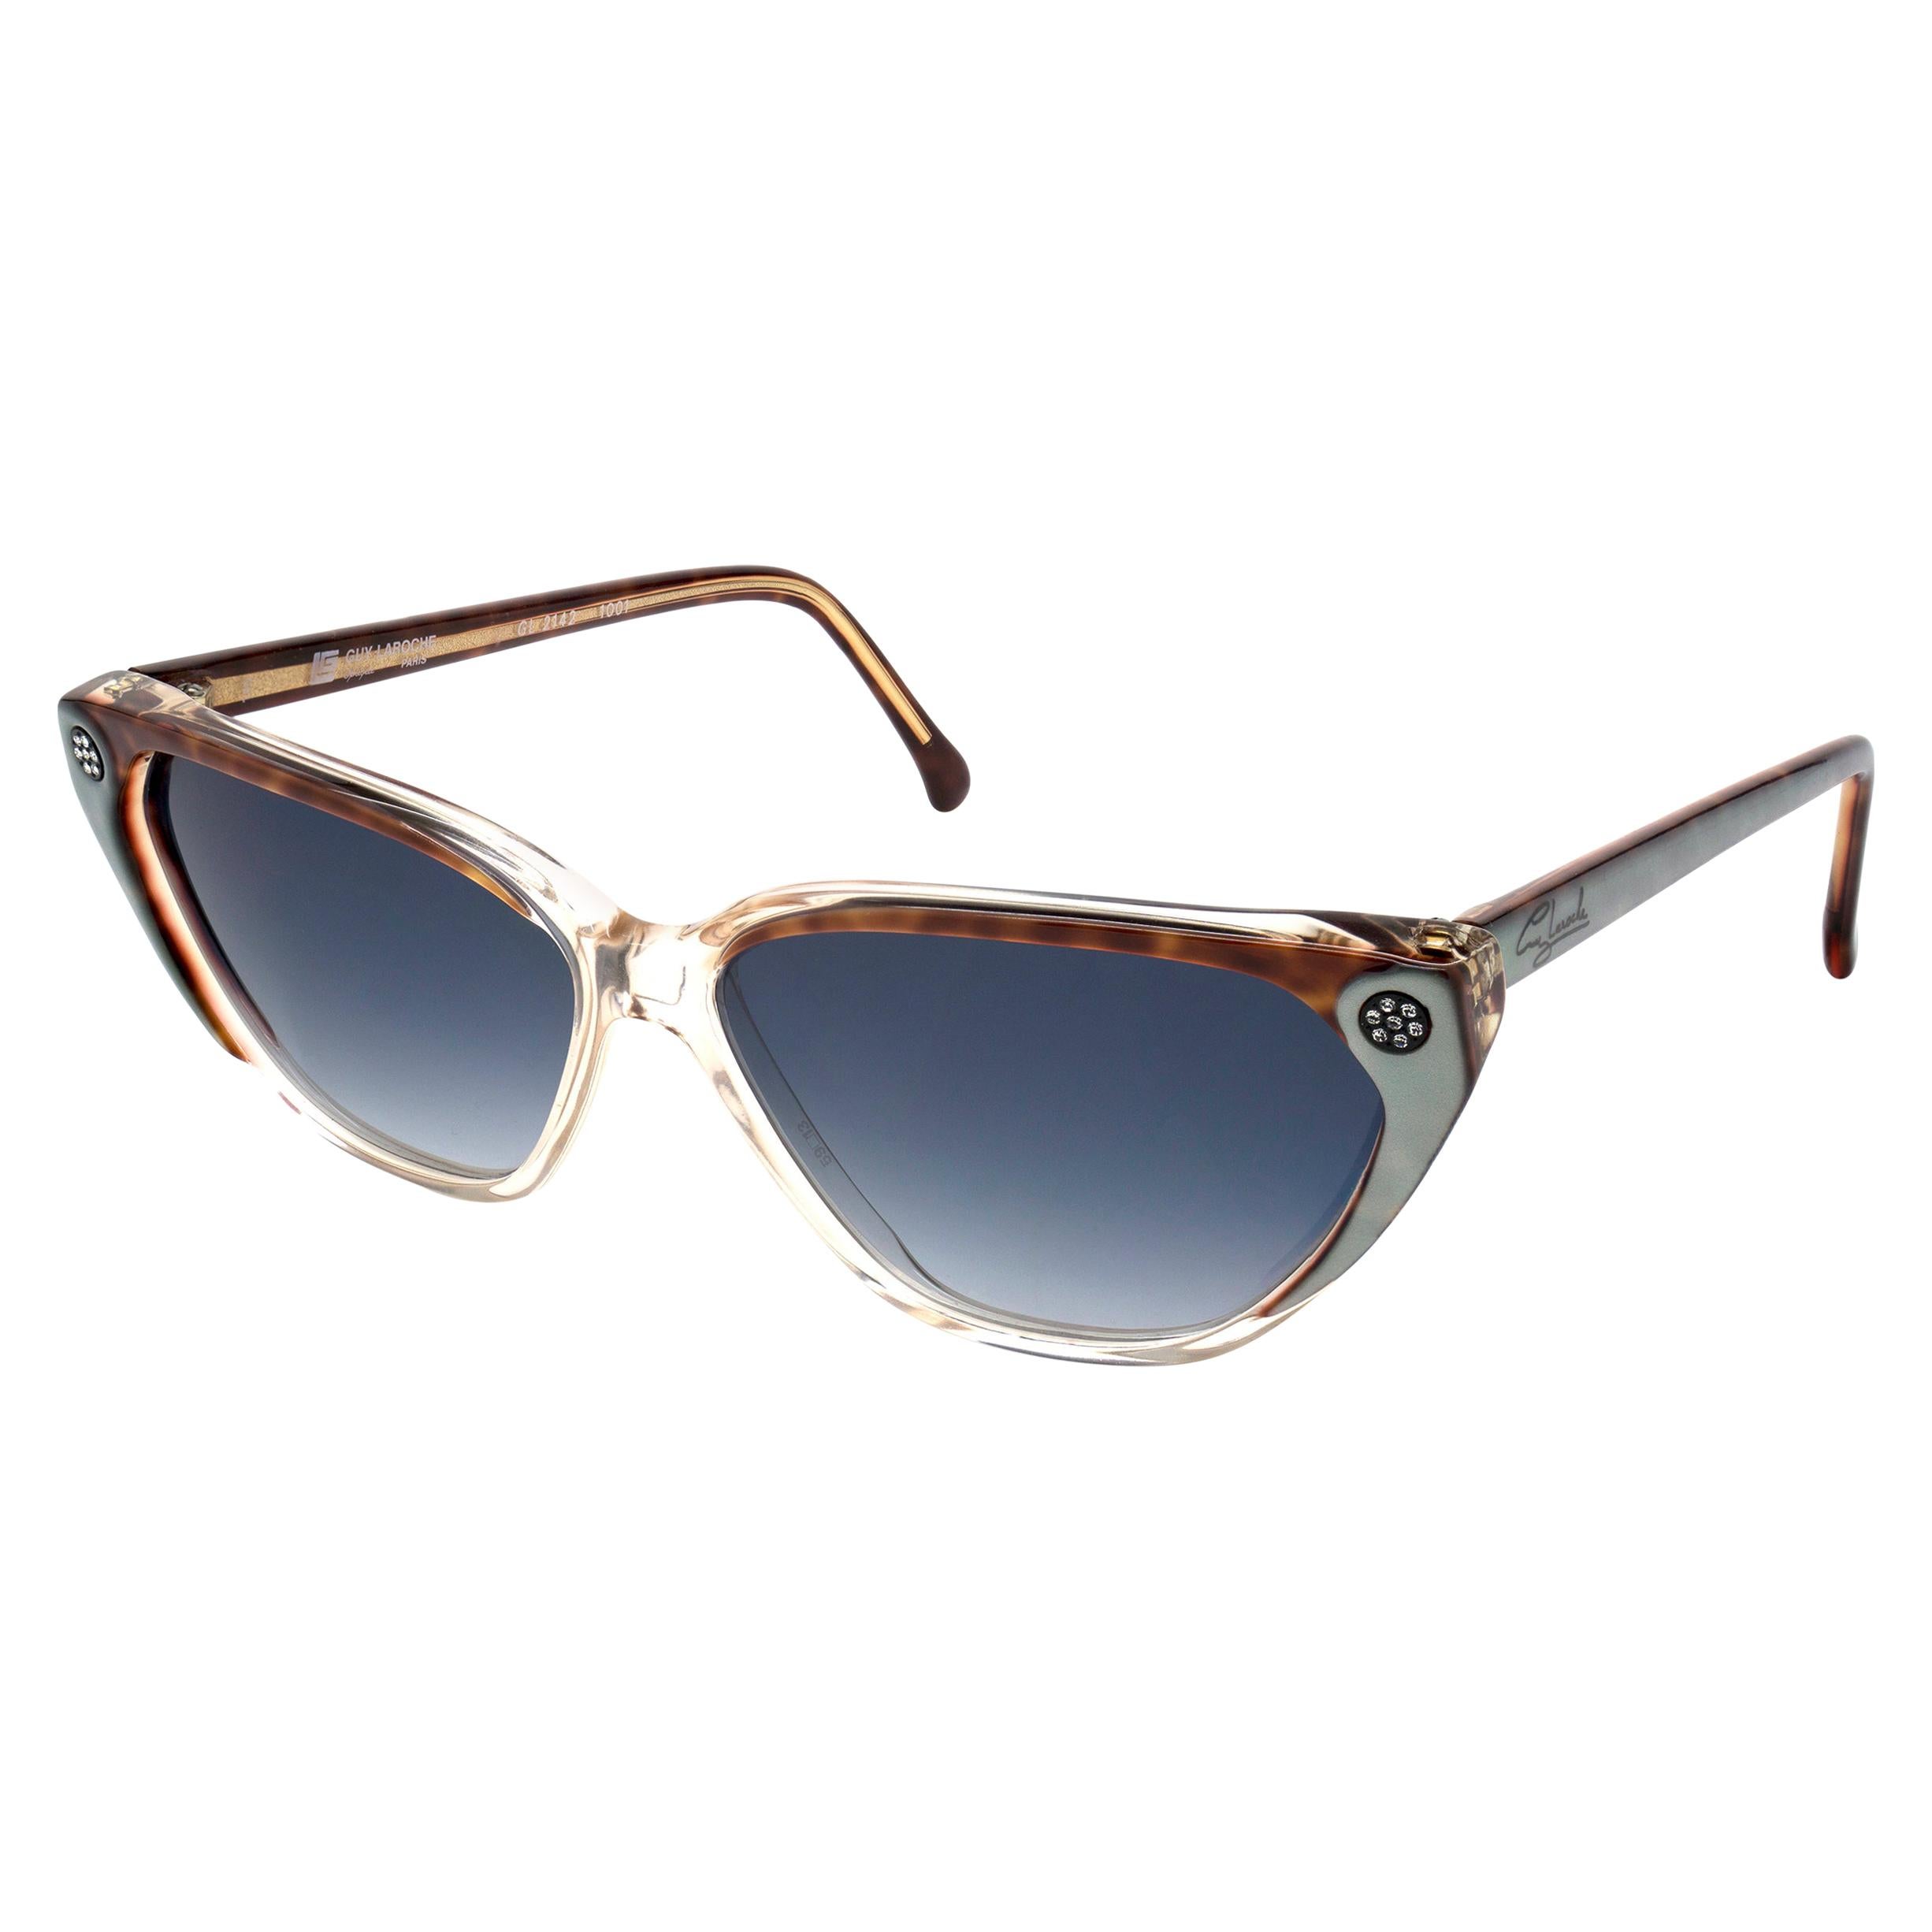 Guy Laroche 80s vintage sunglasses For Sale